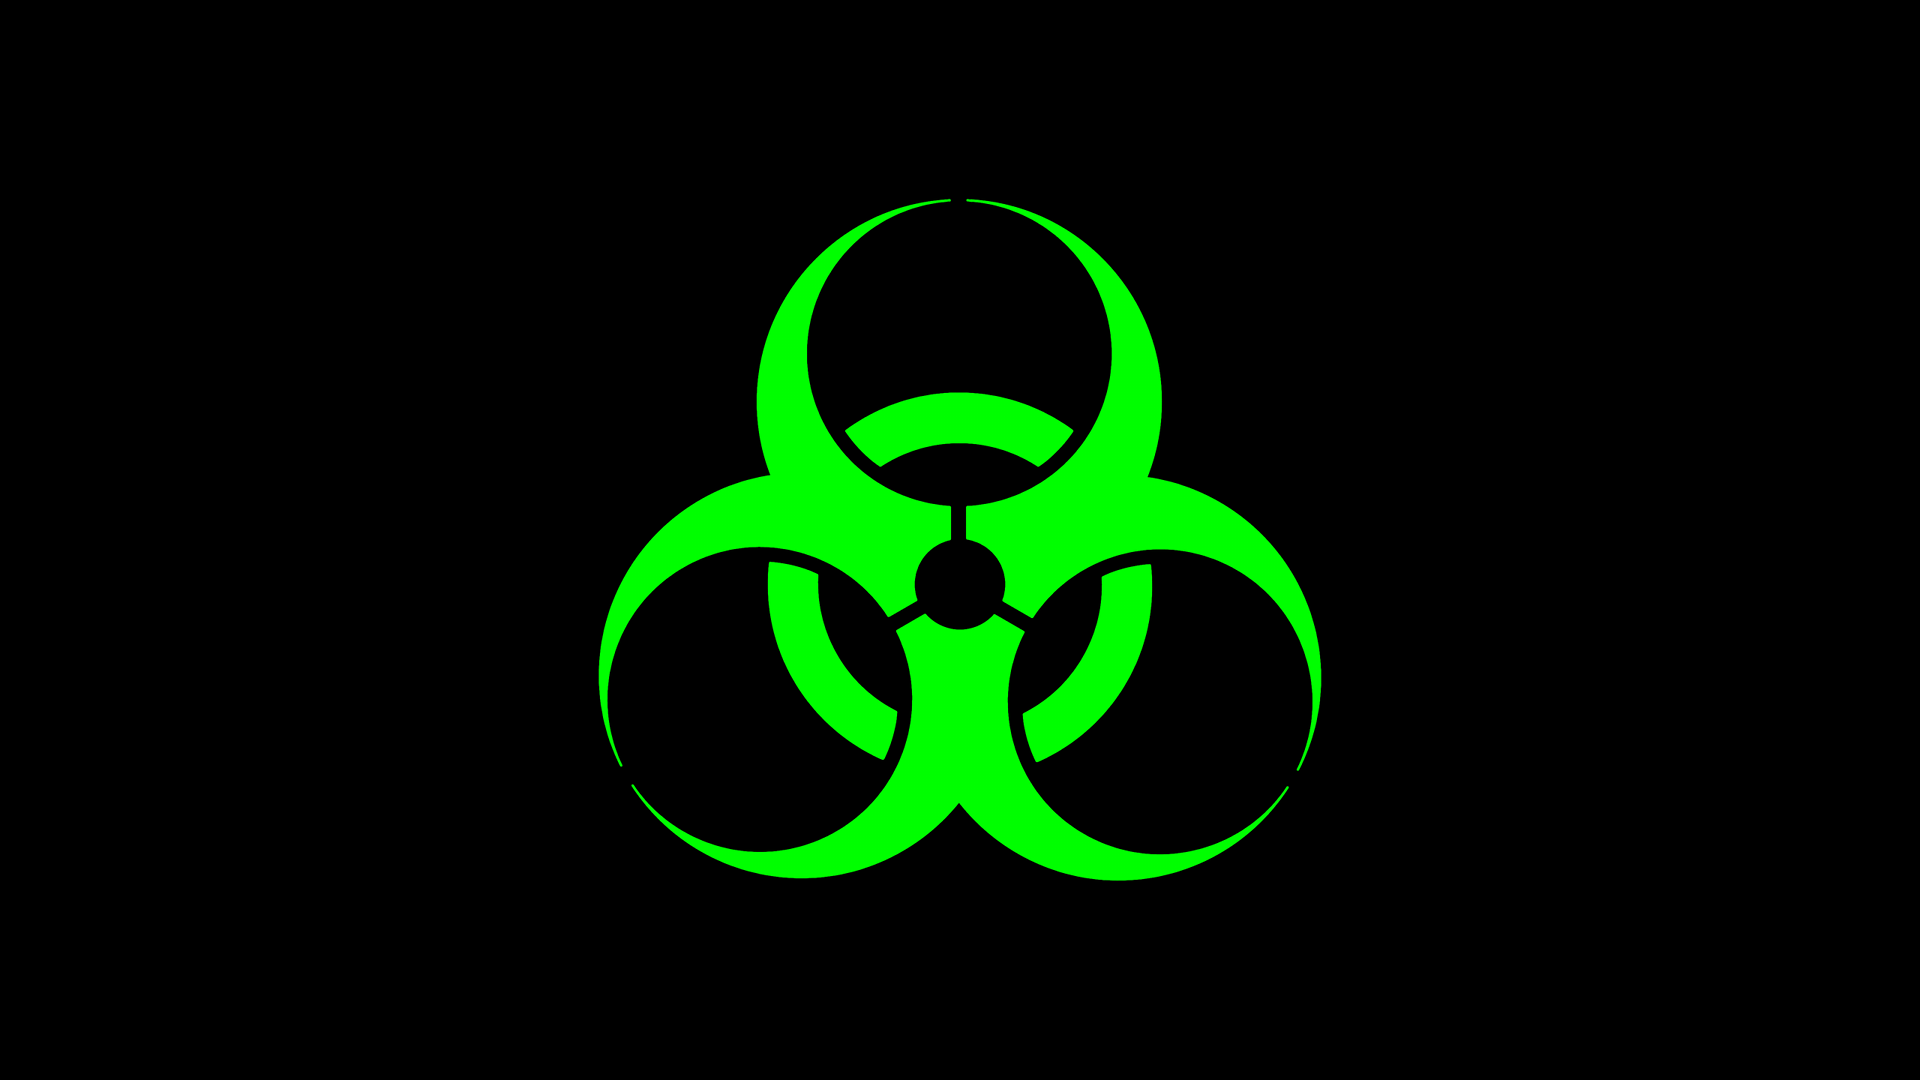 Biohazard Symbol HD Wallpaper | HD Wallpapers, Backgrounds, Images ...